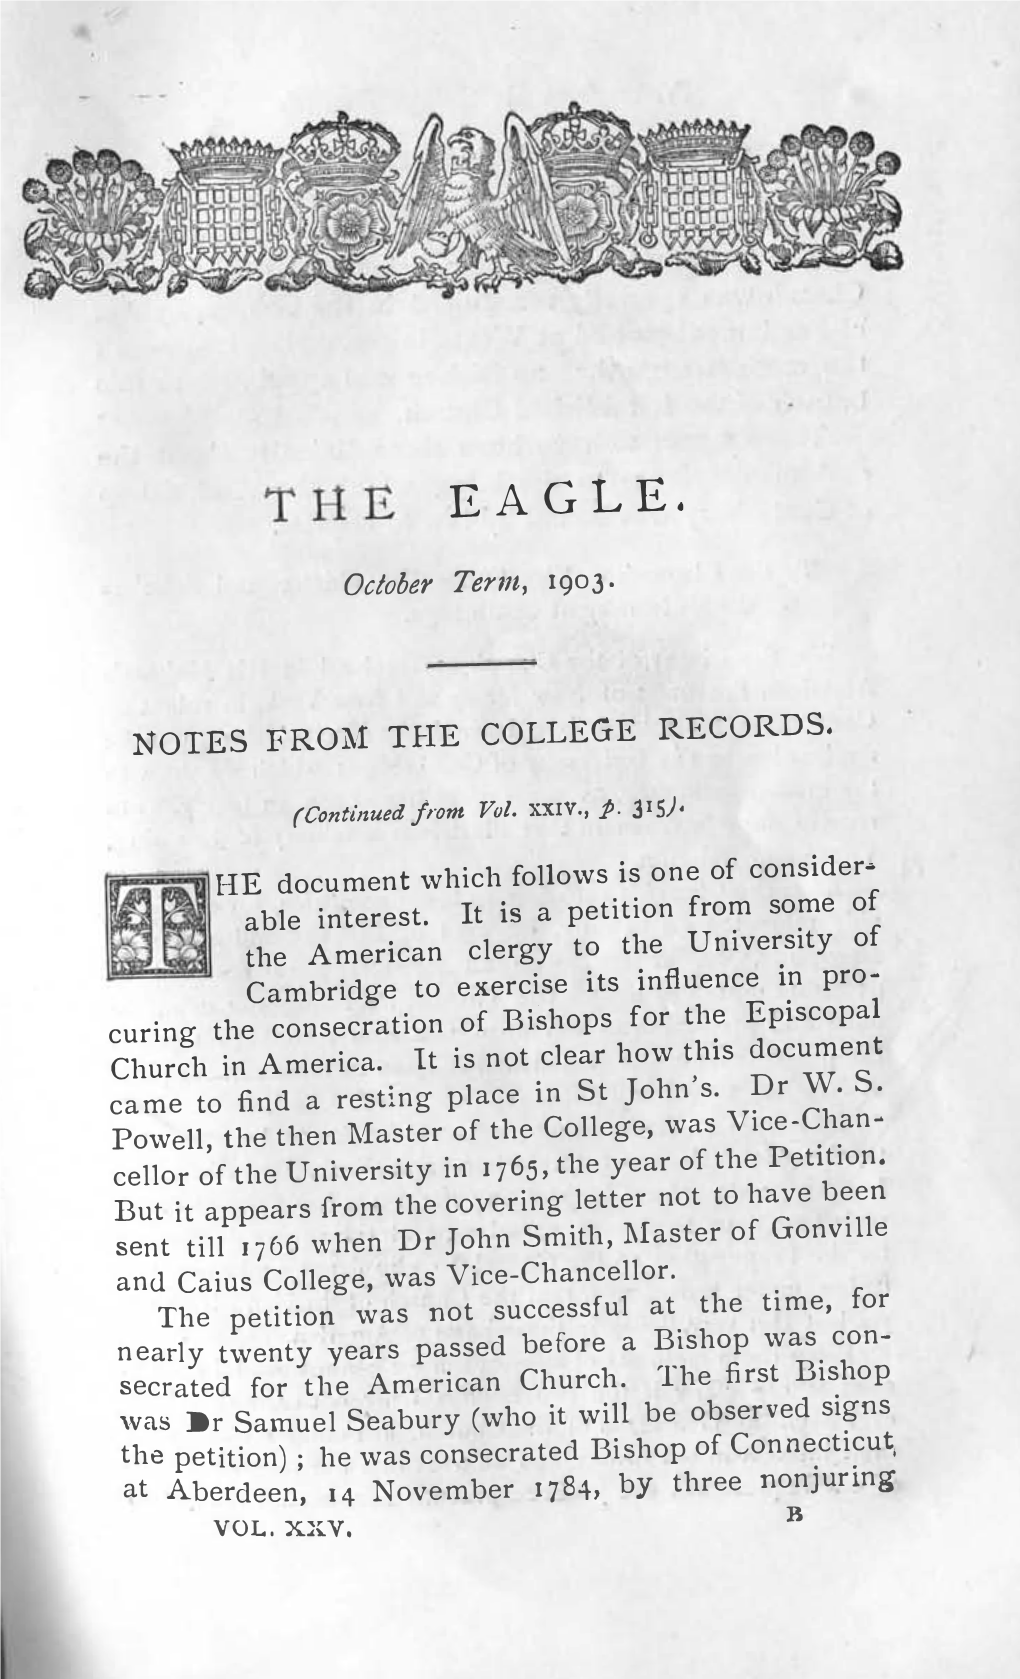 The Eagle 1903 (Michaelmas)